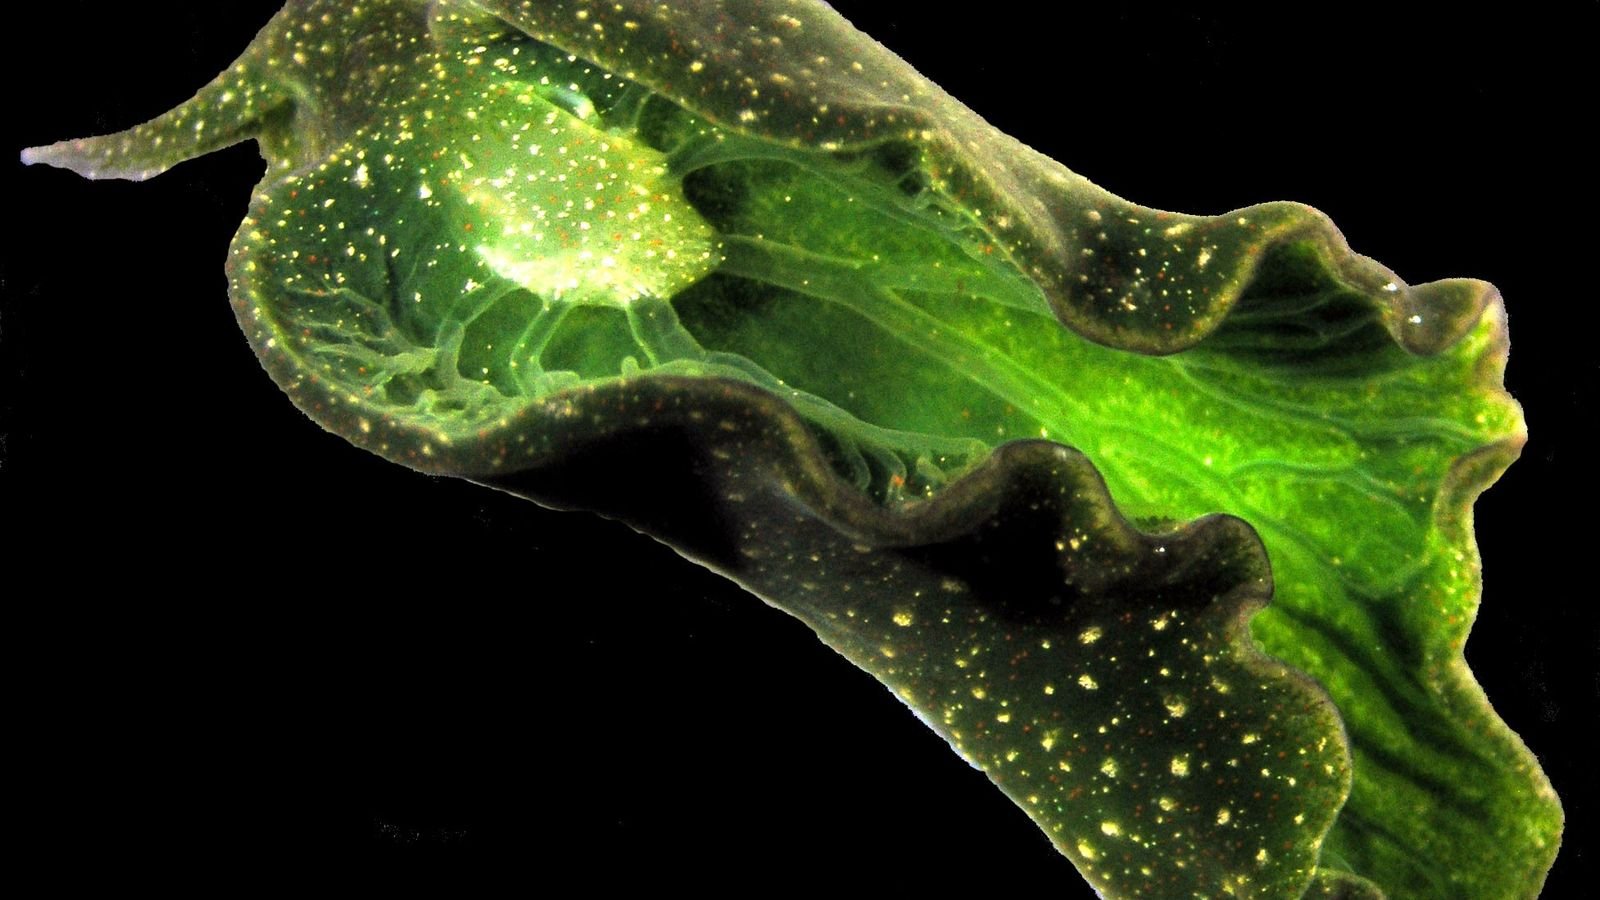 Mysterious sea slugs found